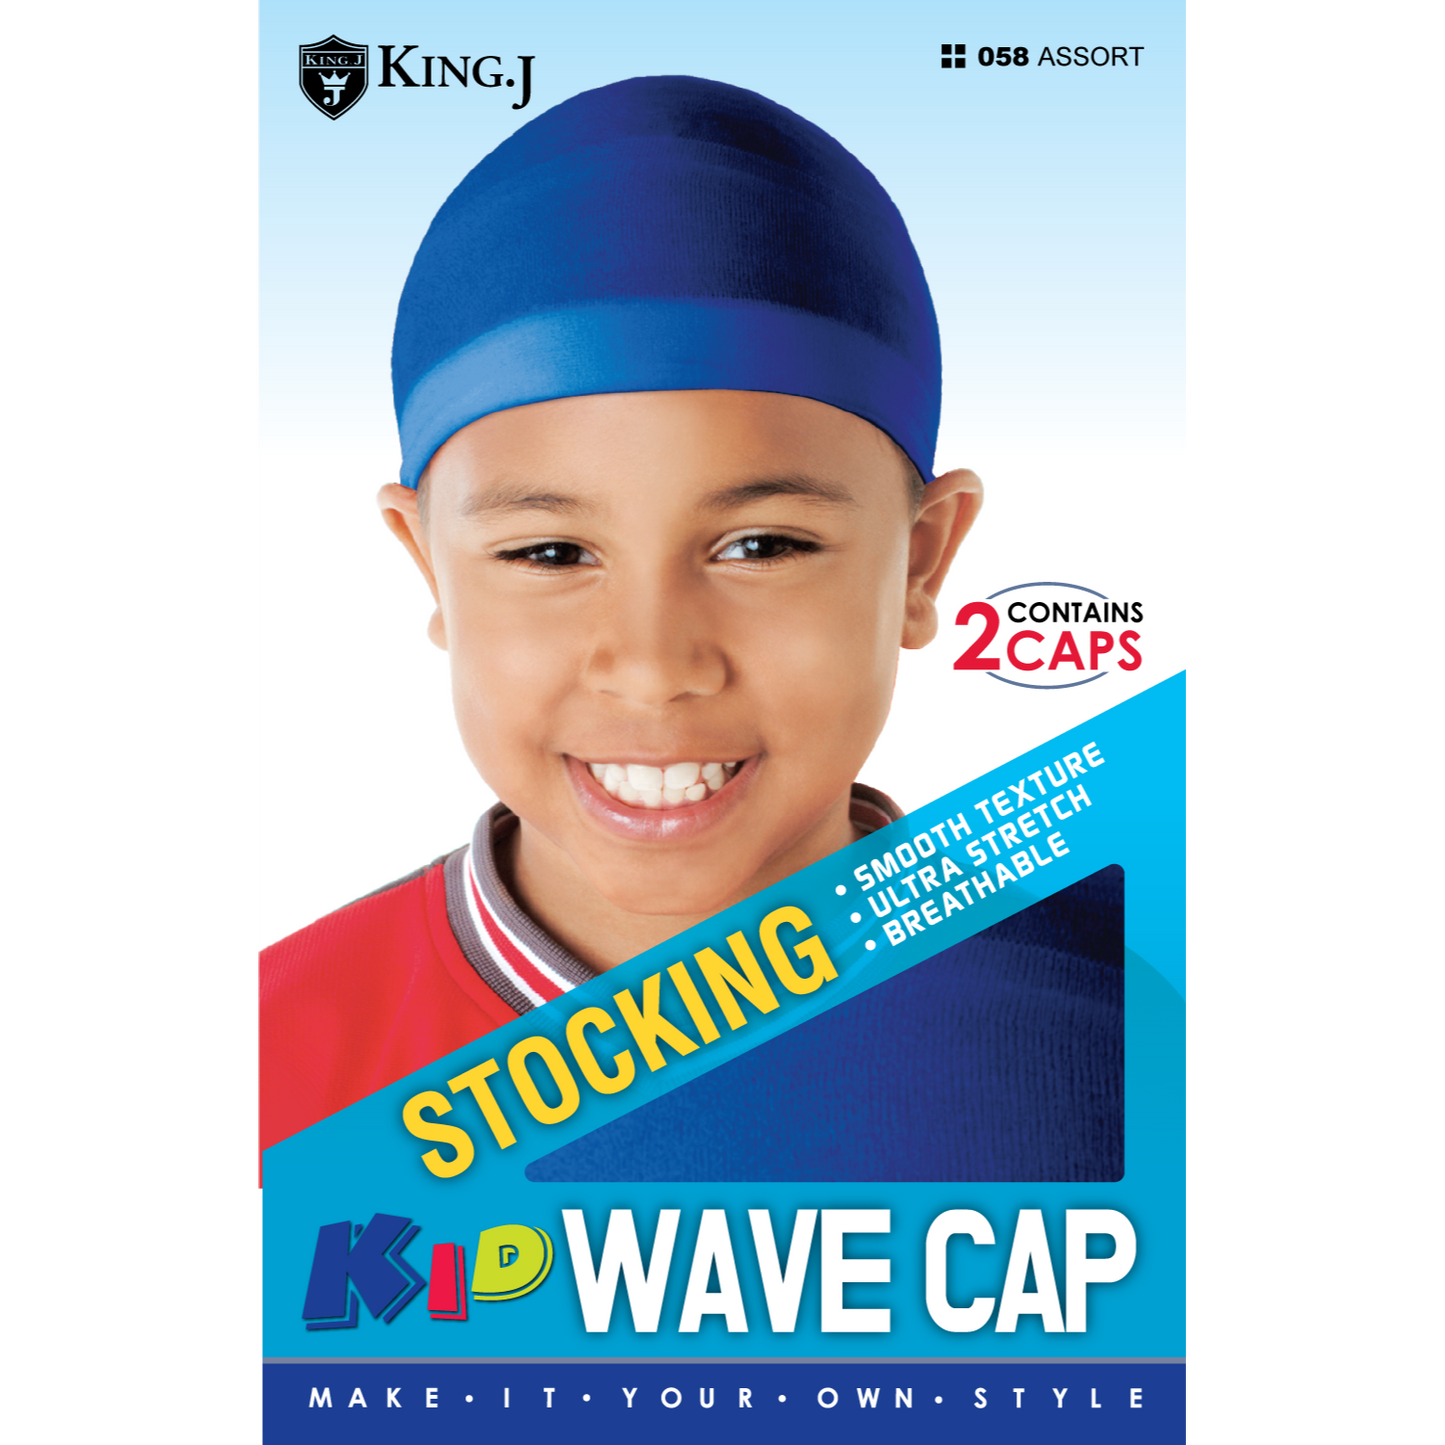 KIDS STOCKING WAVE CAP – Qfitt